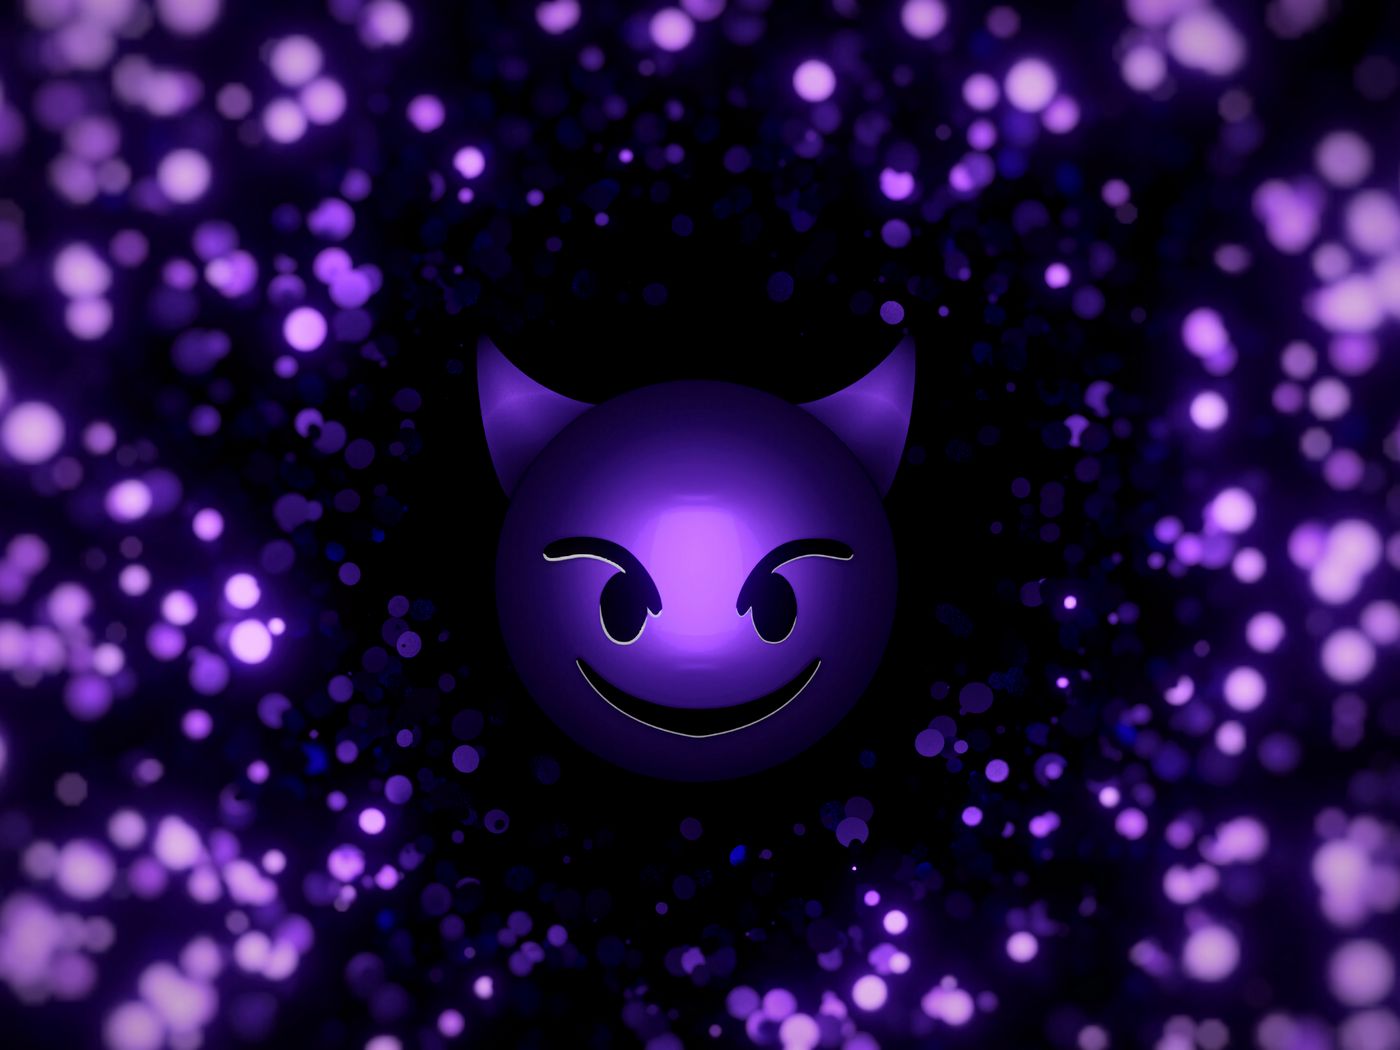 Download wallpaper 1400x1050 smile, smiley, devil, particles, purple standard 4:3 HD background